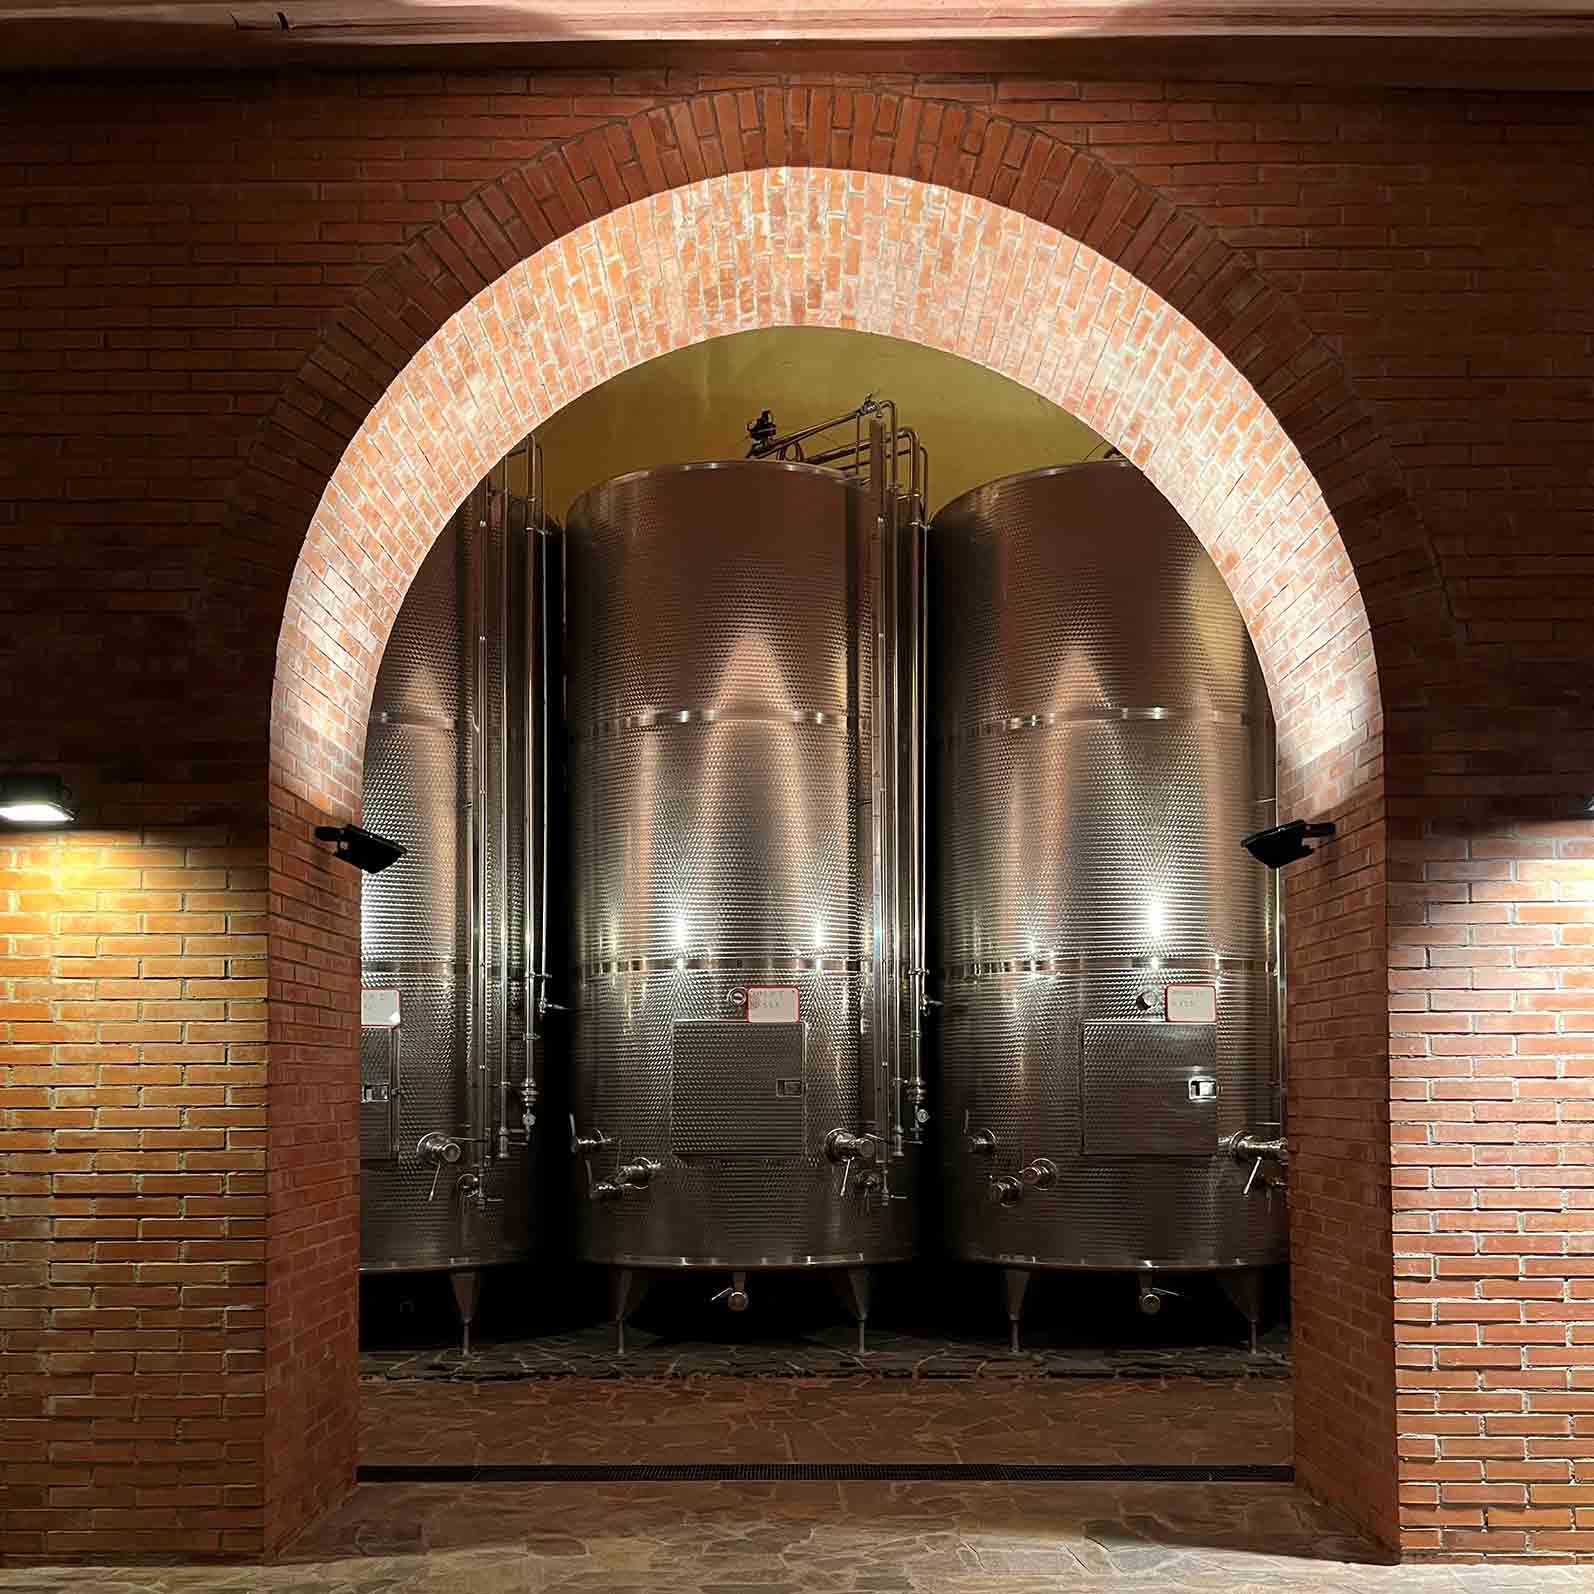 Back-lit wine bottles in Anselmi's cellar